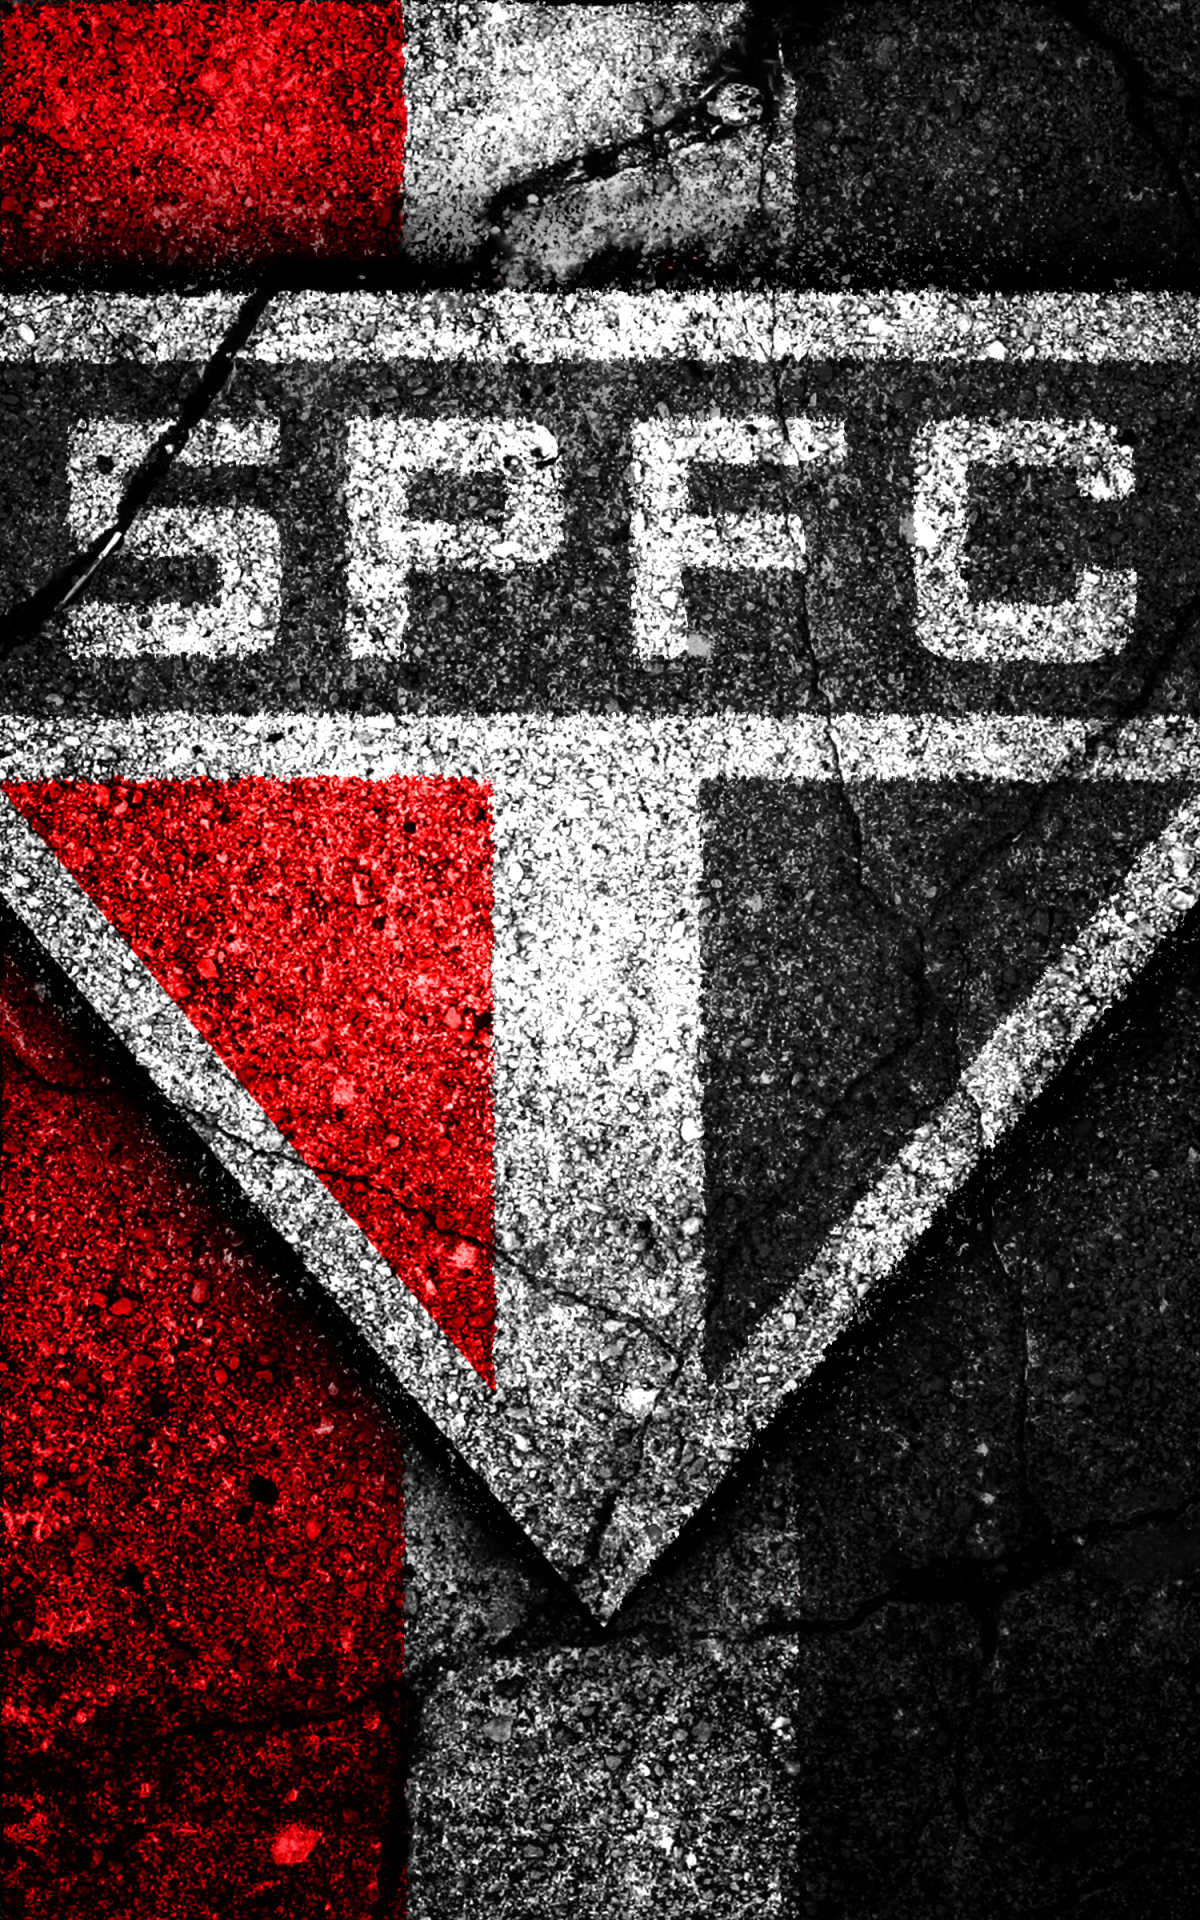 Handy-Wallpaper Sport, Fußball, Logo, Emblem, Fc São Paulo kostenlos herunterladen.